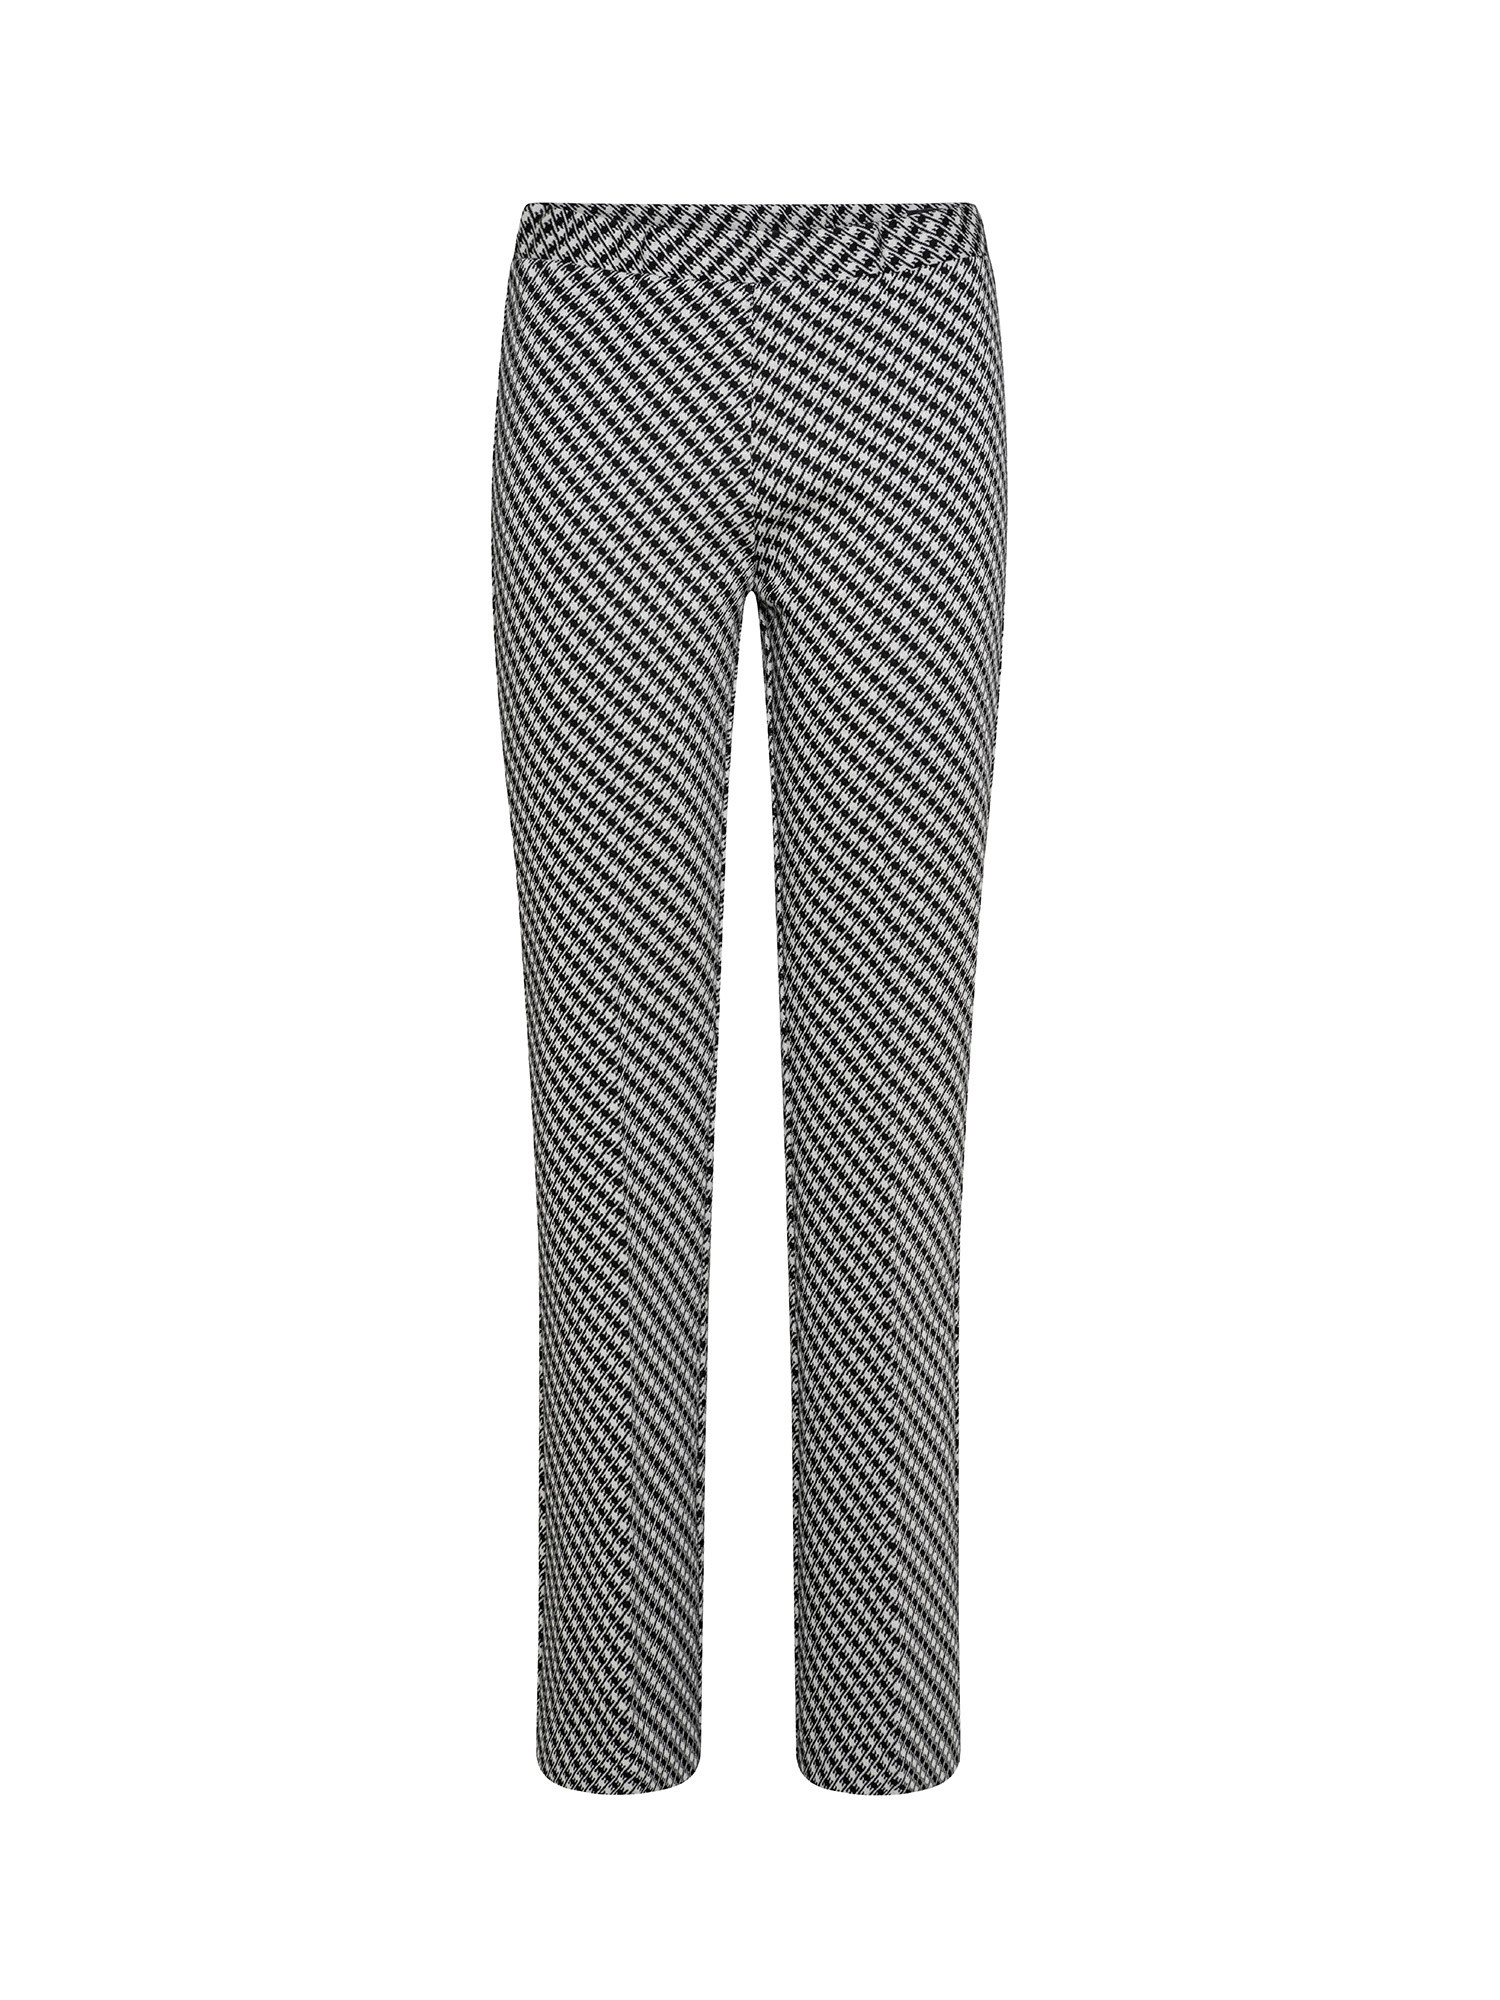 Koan - Pantalone flare jacquard, Bianco, large image number 0